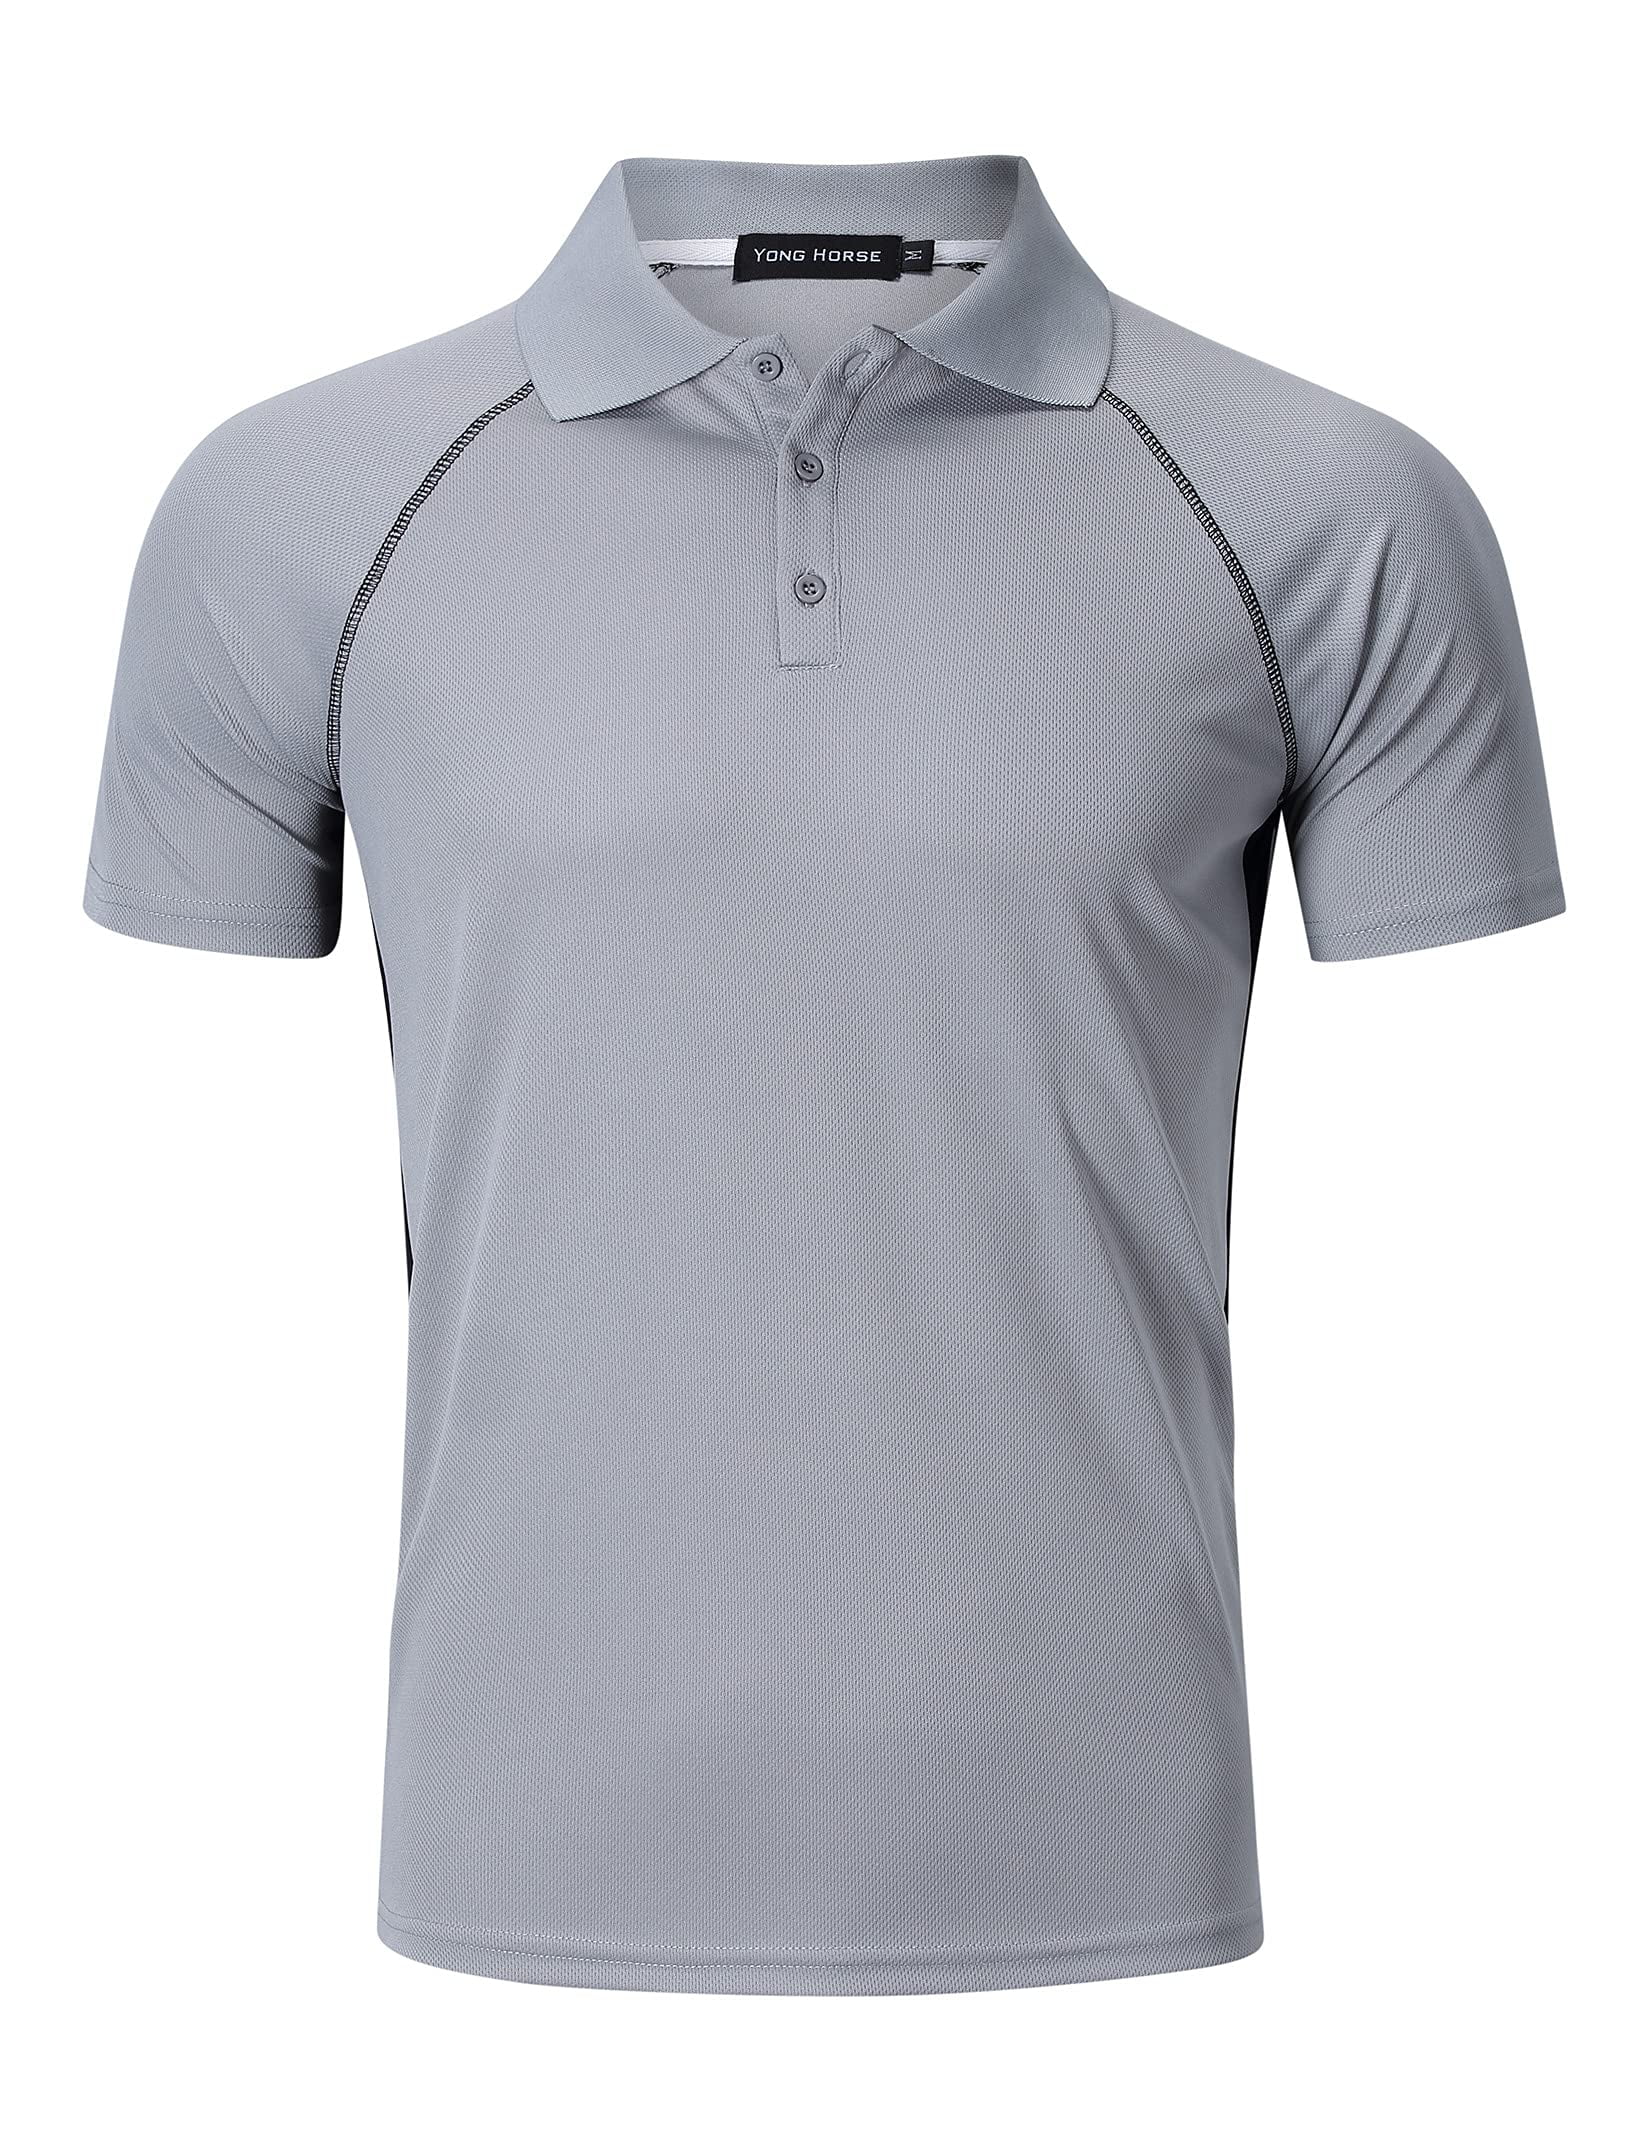 HA-EMORE Men's Golf Shirts Short Sleeve Collared T Shirt Slim Fit